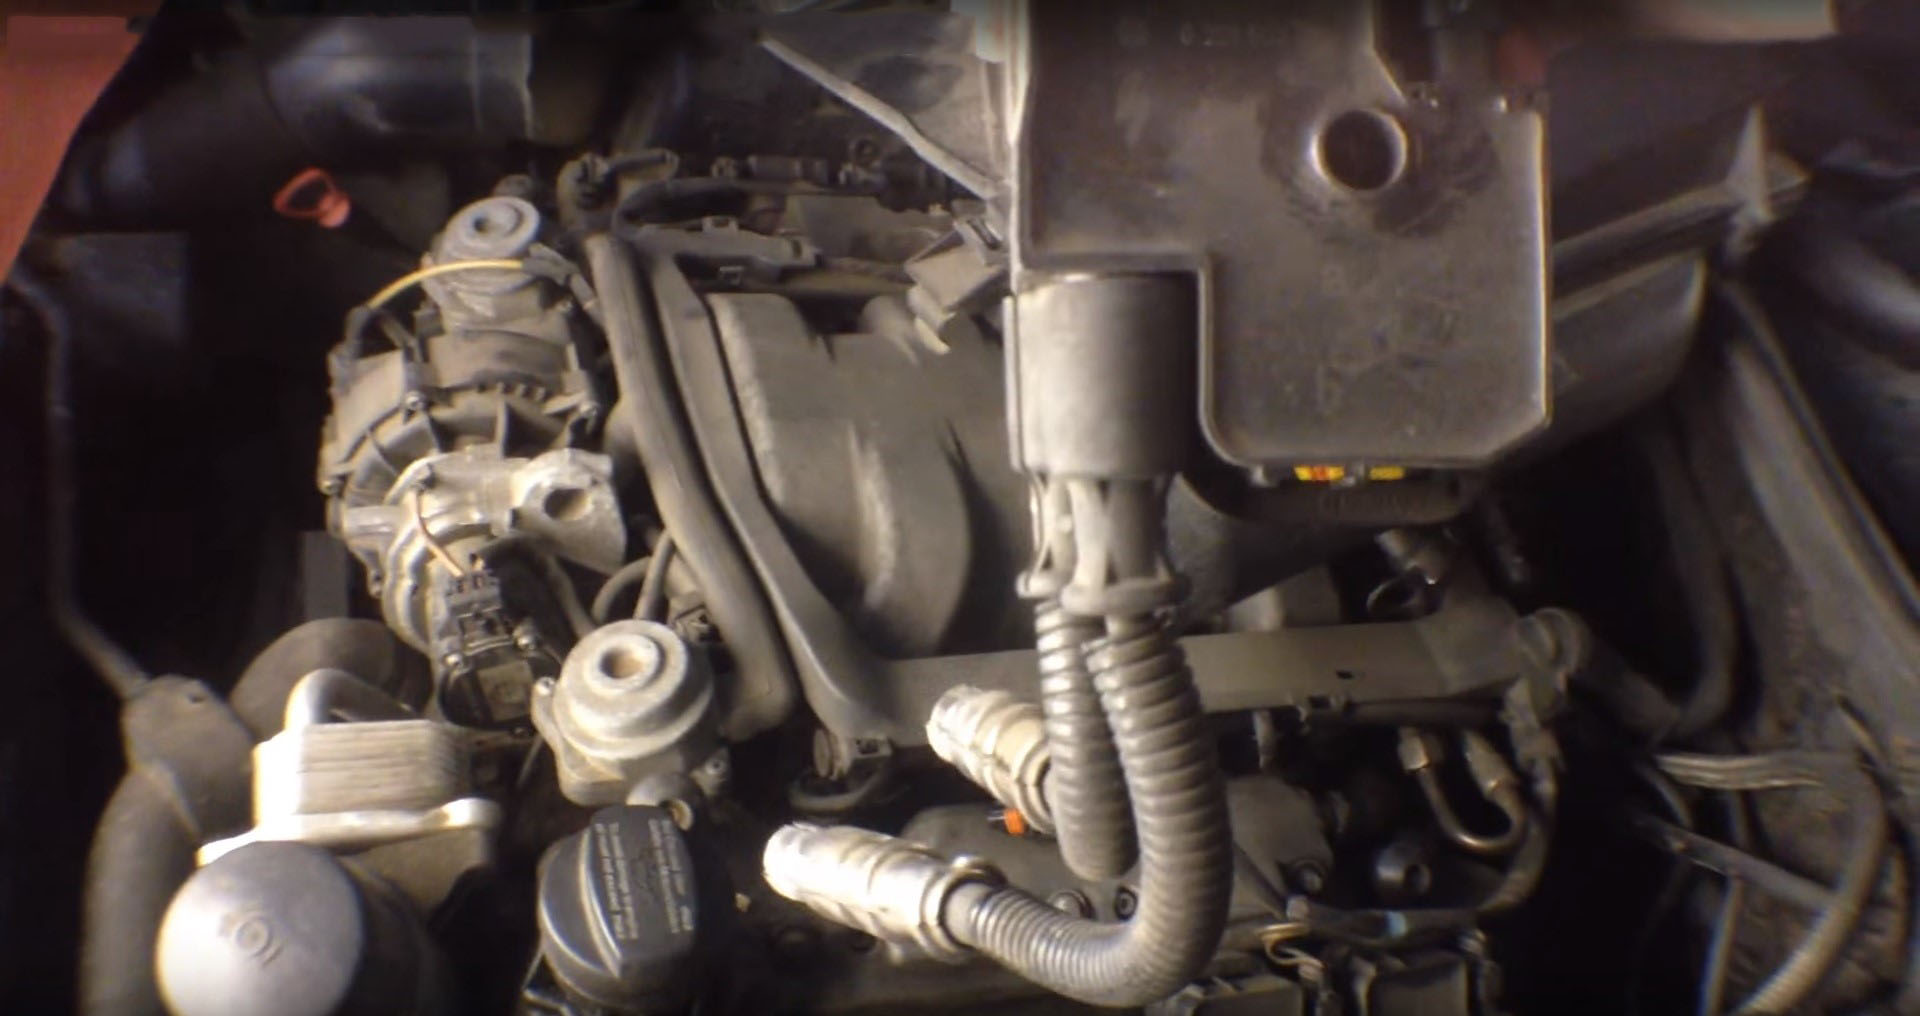 Снятие катушки двигателя Mercedes Benz W203